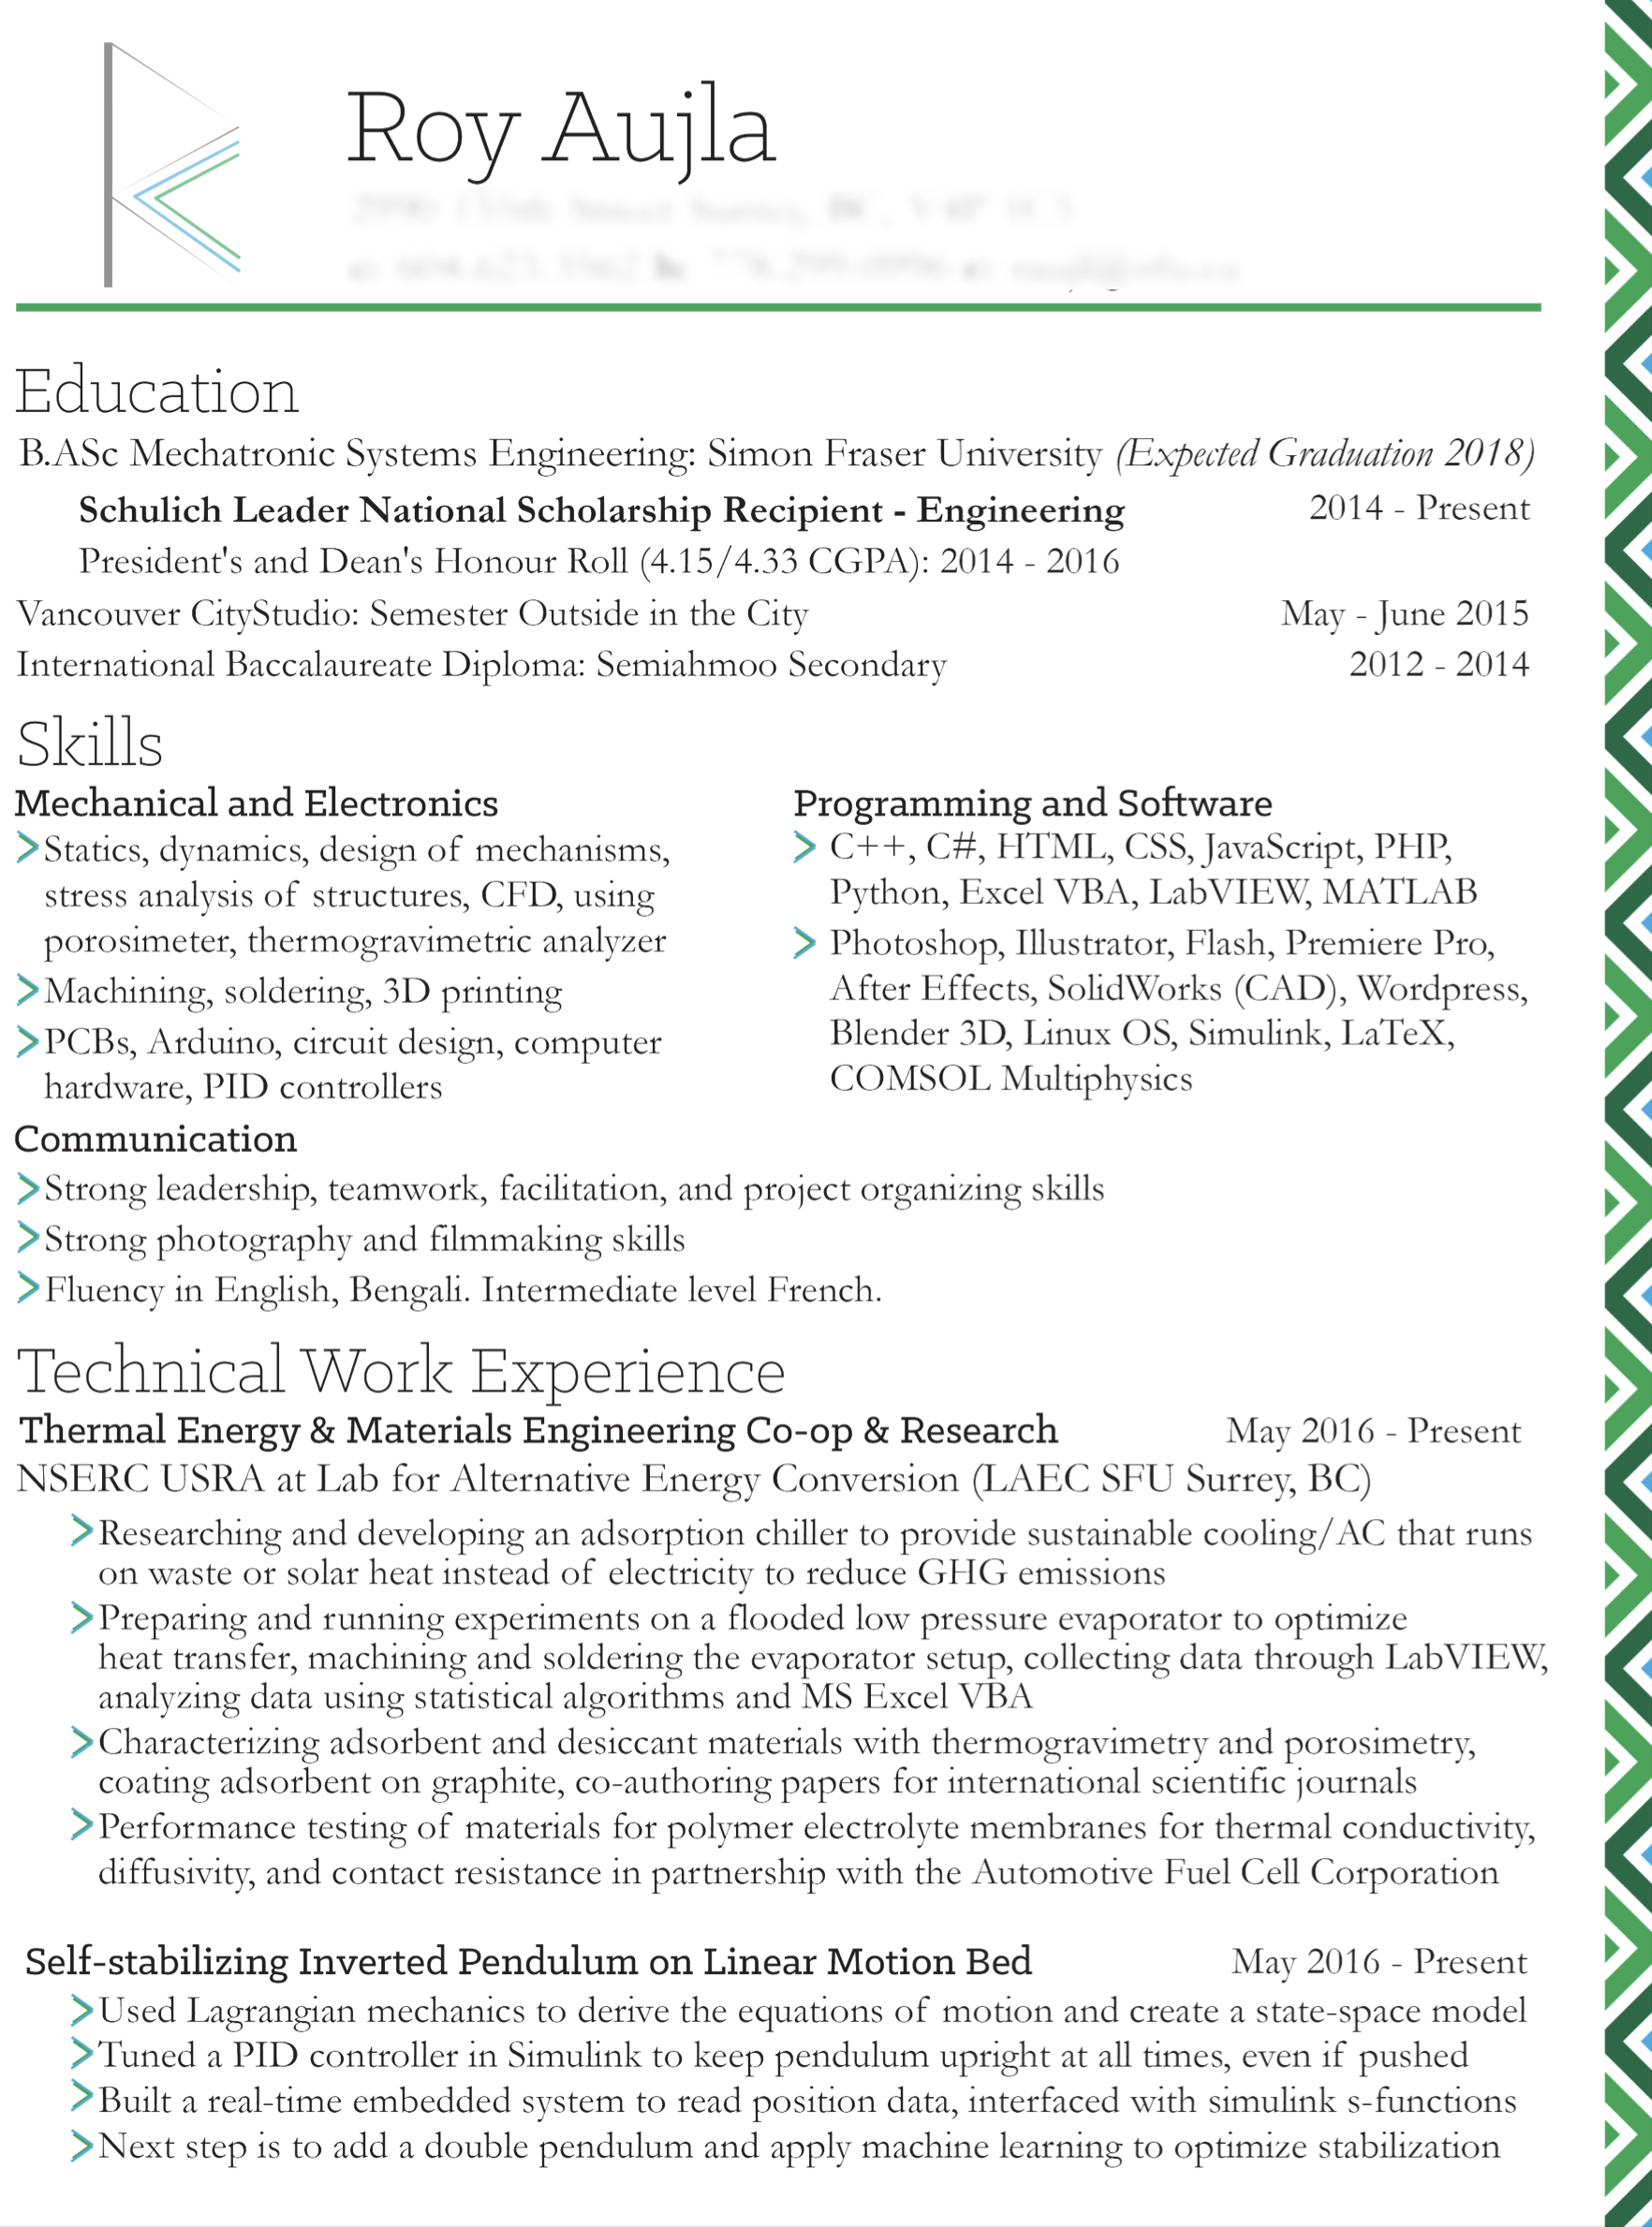 Resume Sample page 1